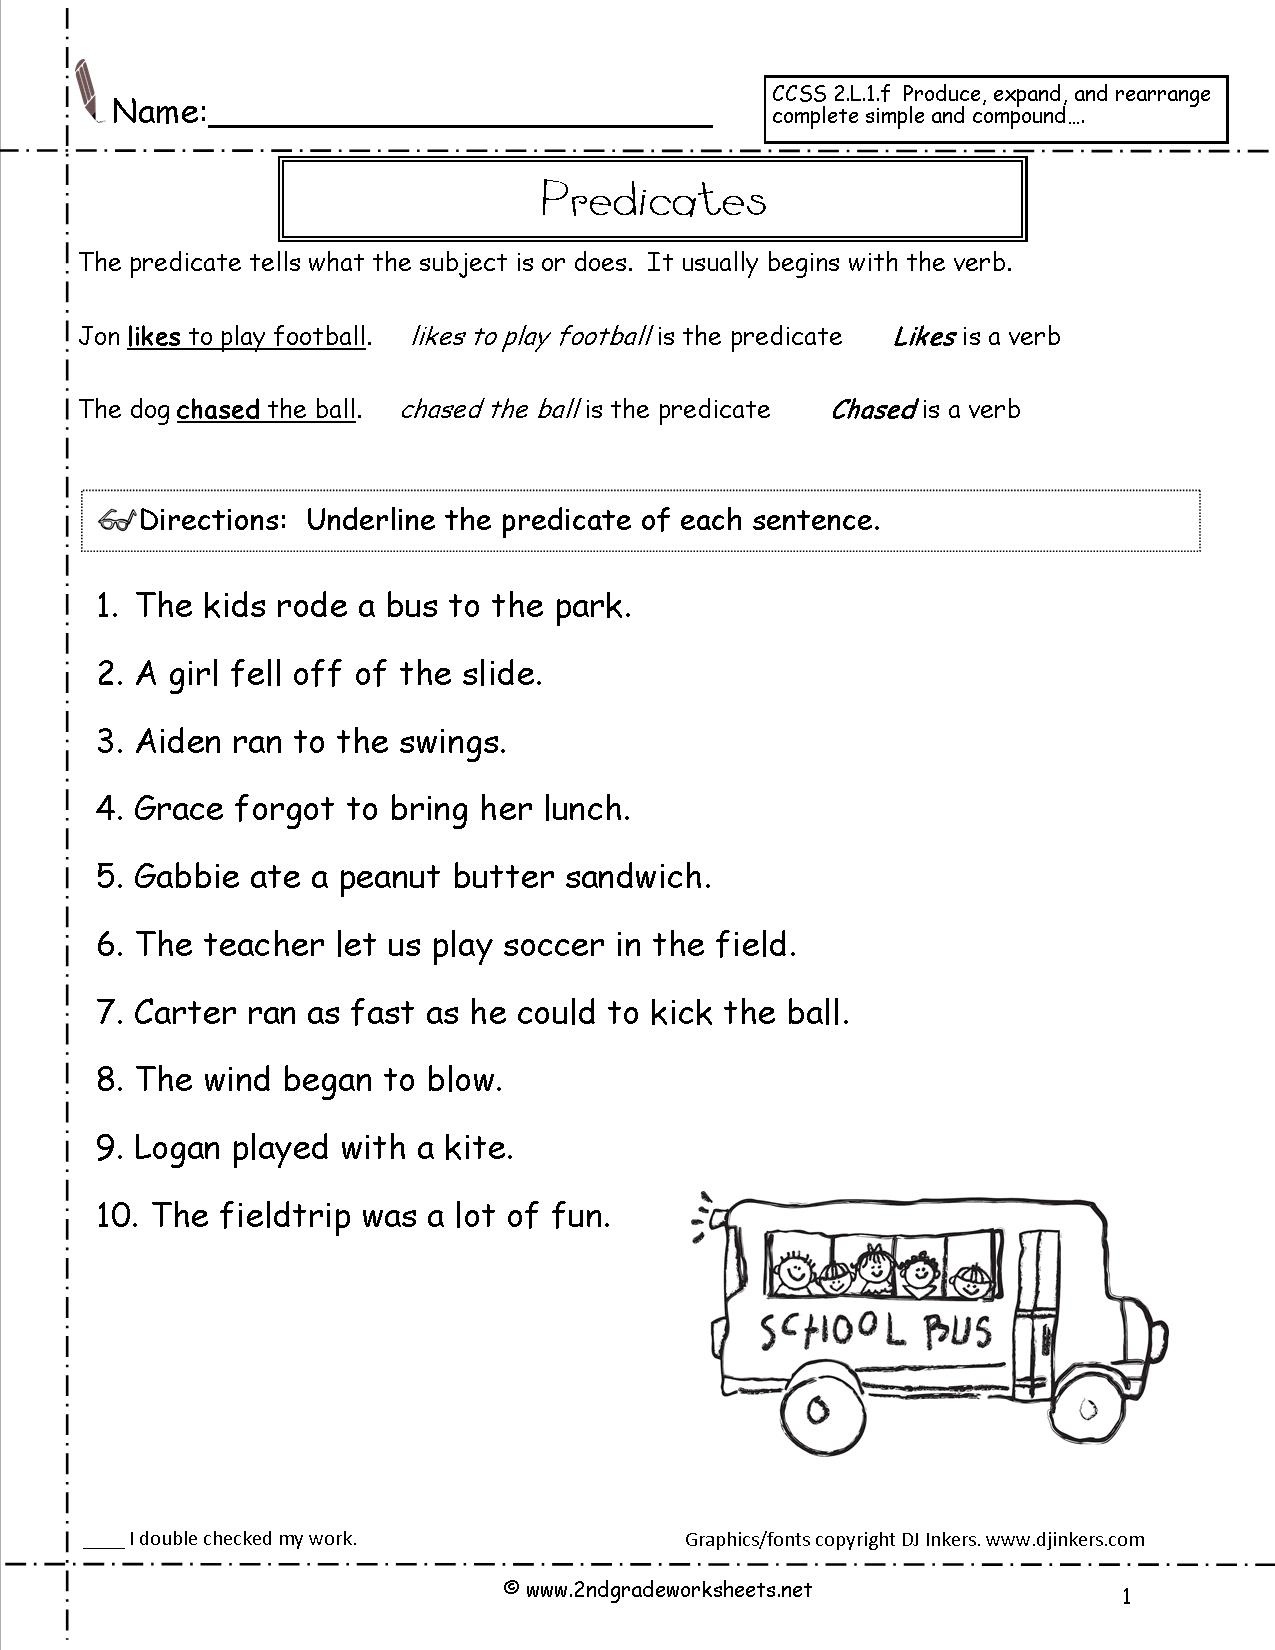 Second Grade Sentences Worksheets Ccss 2 l 1 f Worksheets Free Printable Sentence Correction